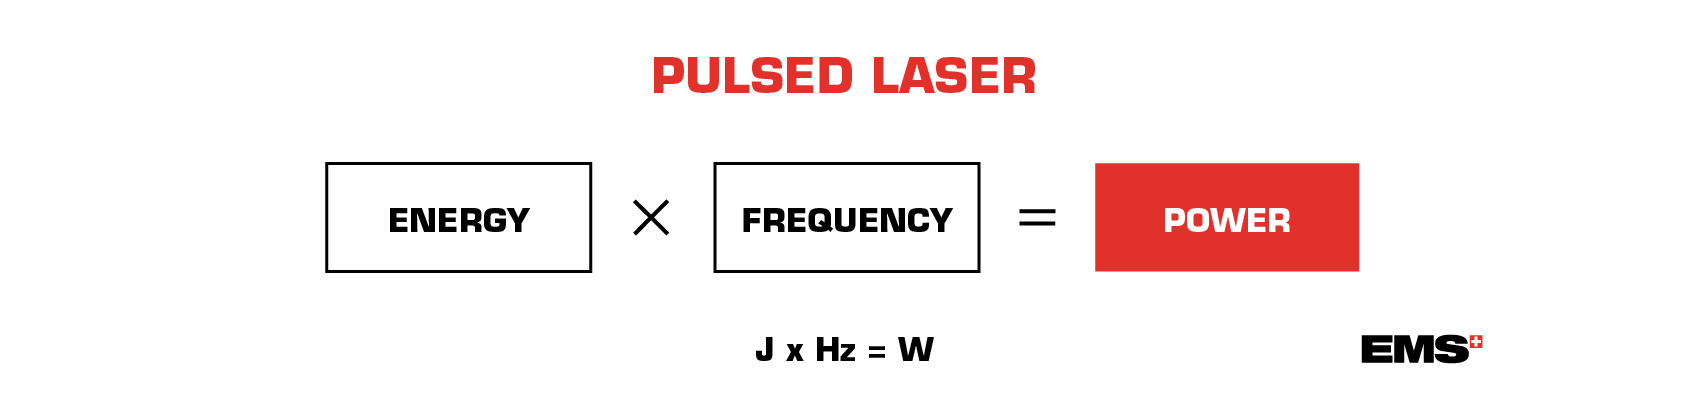 pulsed laser